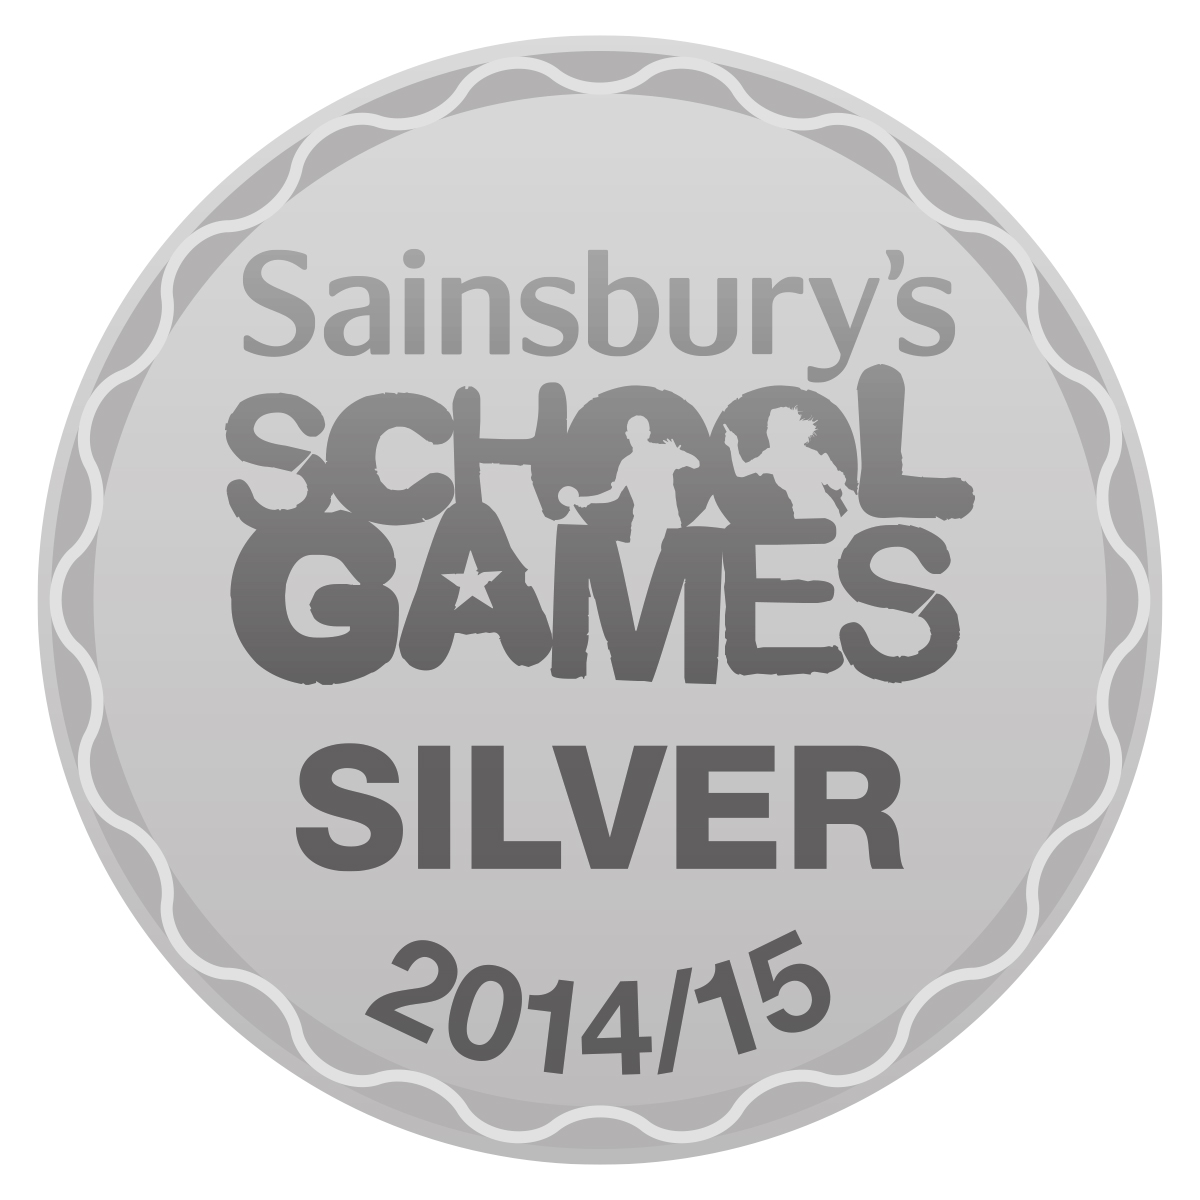 Sainsburys School Games Silver 2014/15